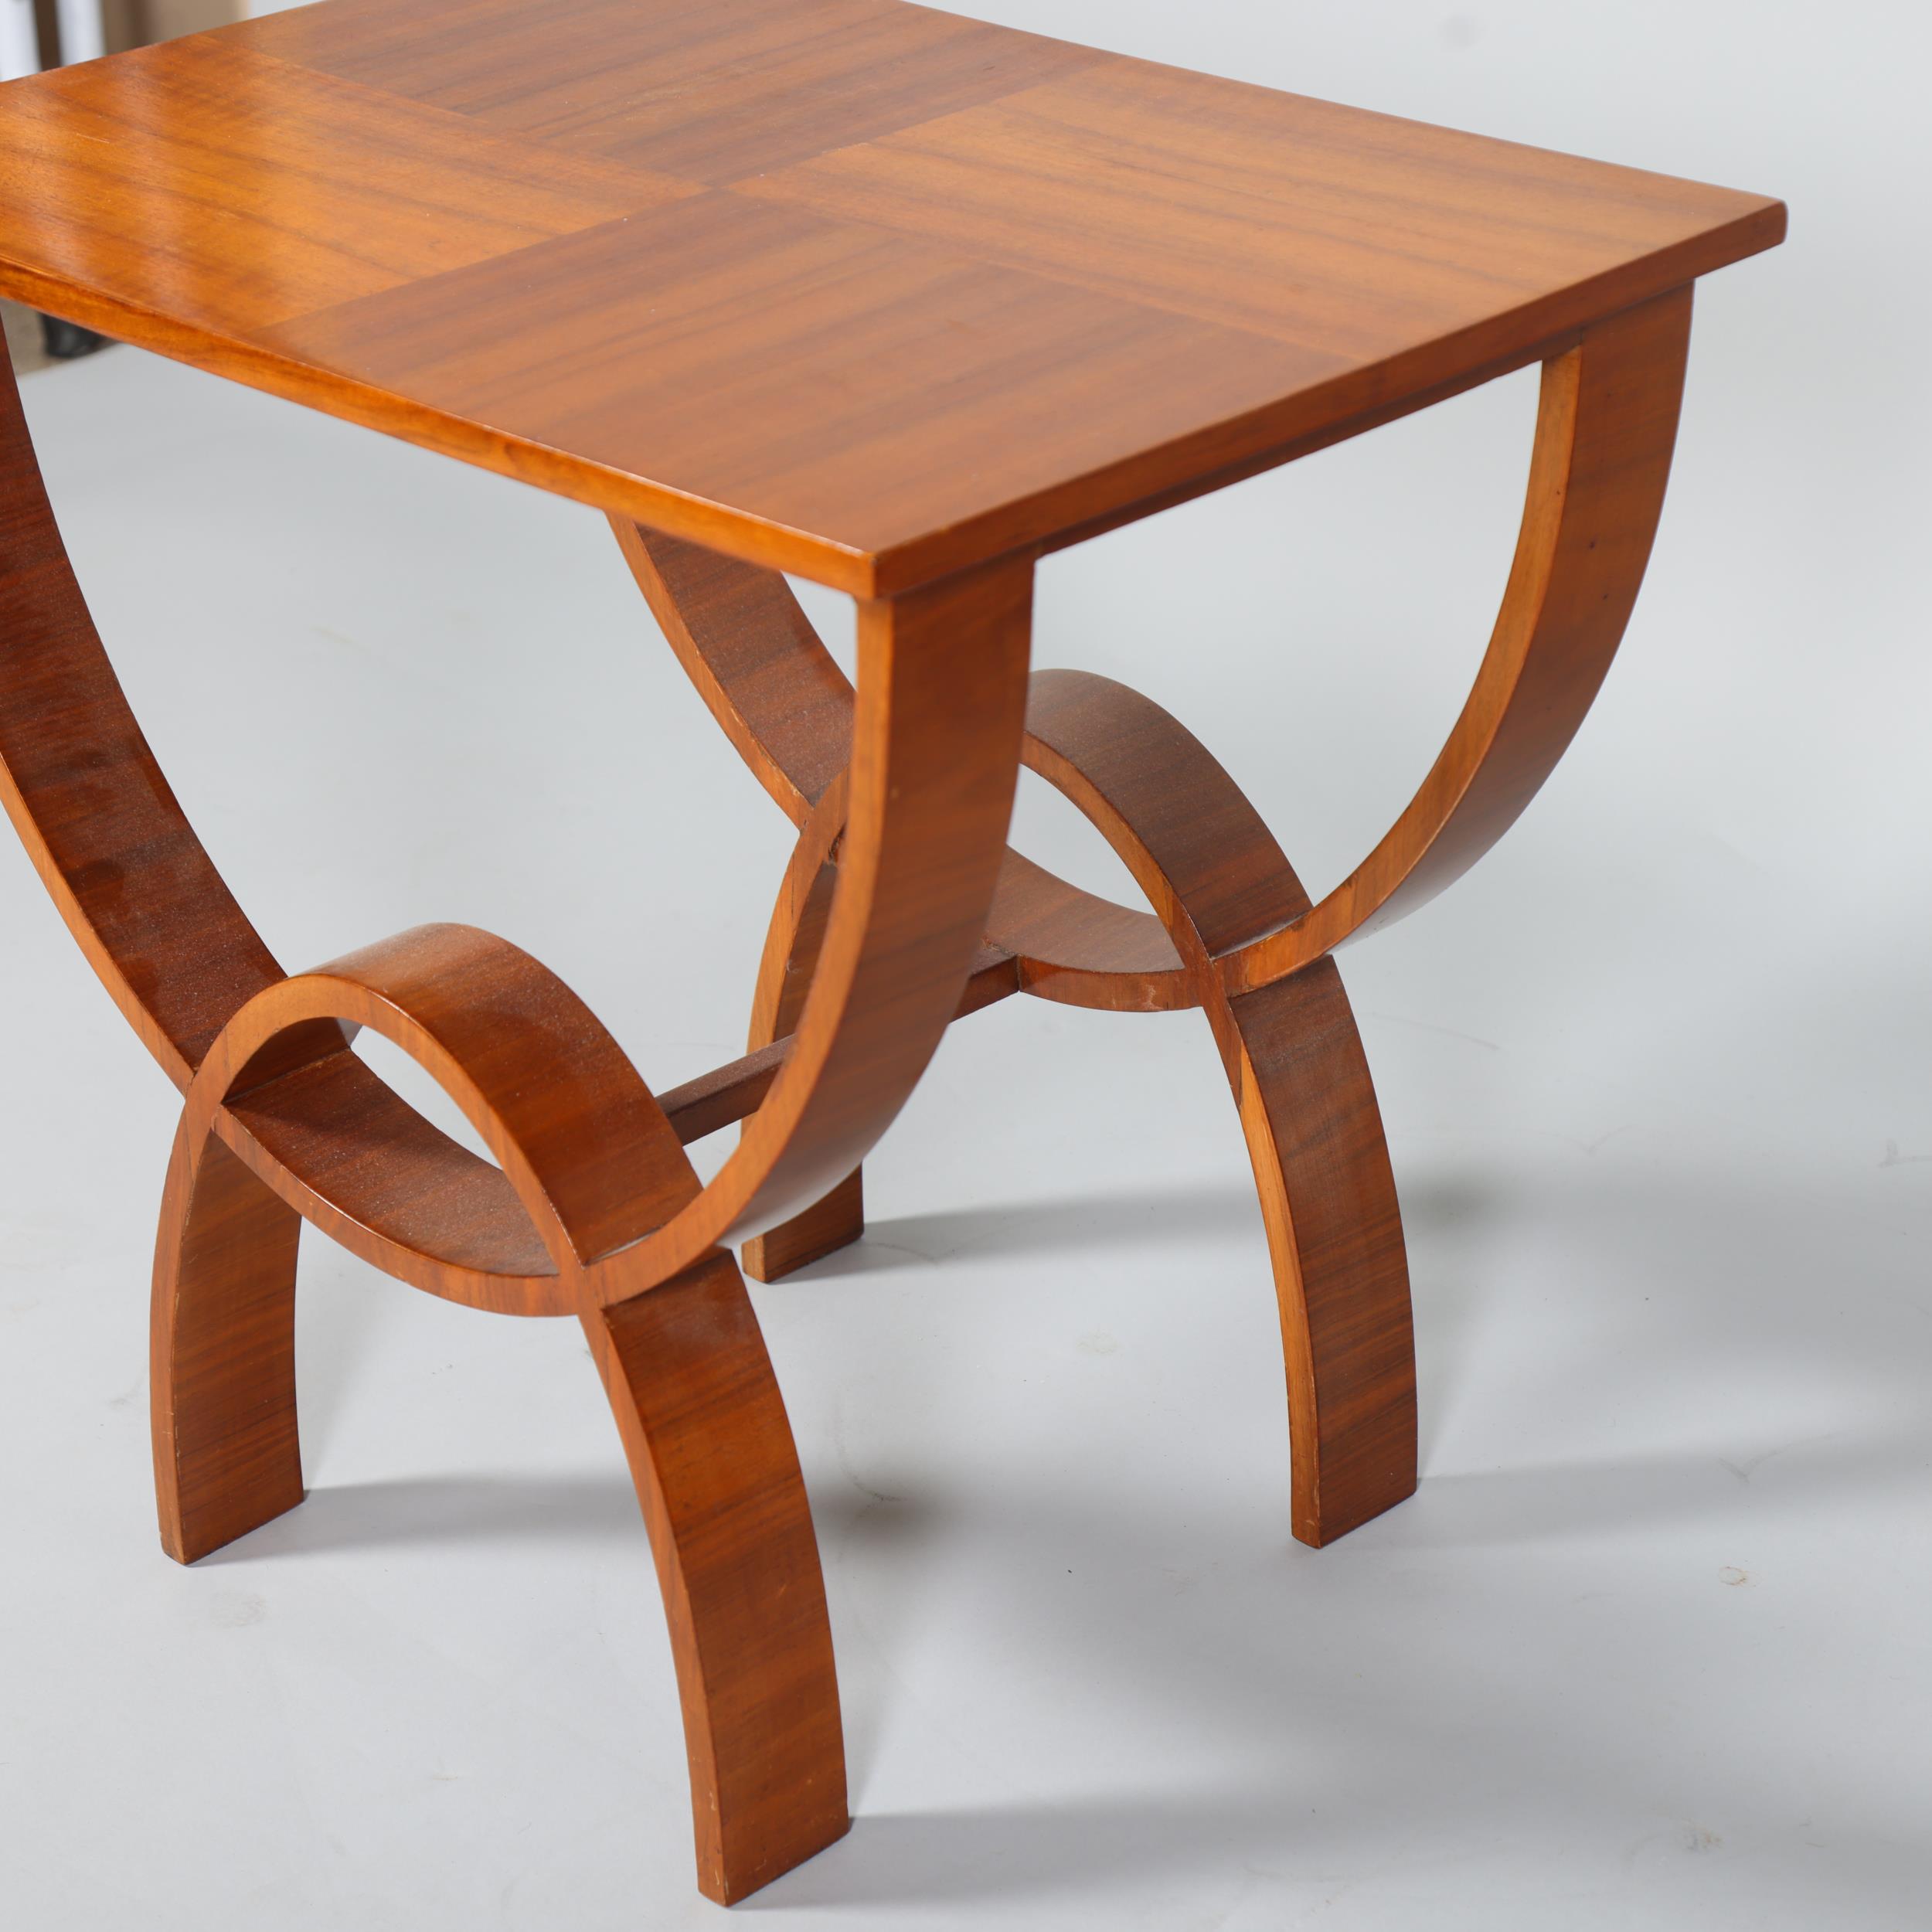 Art Deco walnut rectangular occasional table, with quarter veneer top, 58cm x 41cm, height 53cm - Image 3 of 3